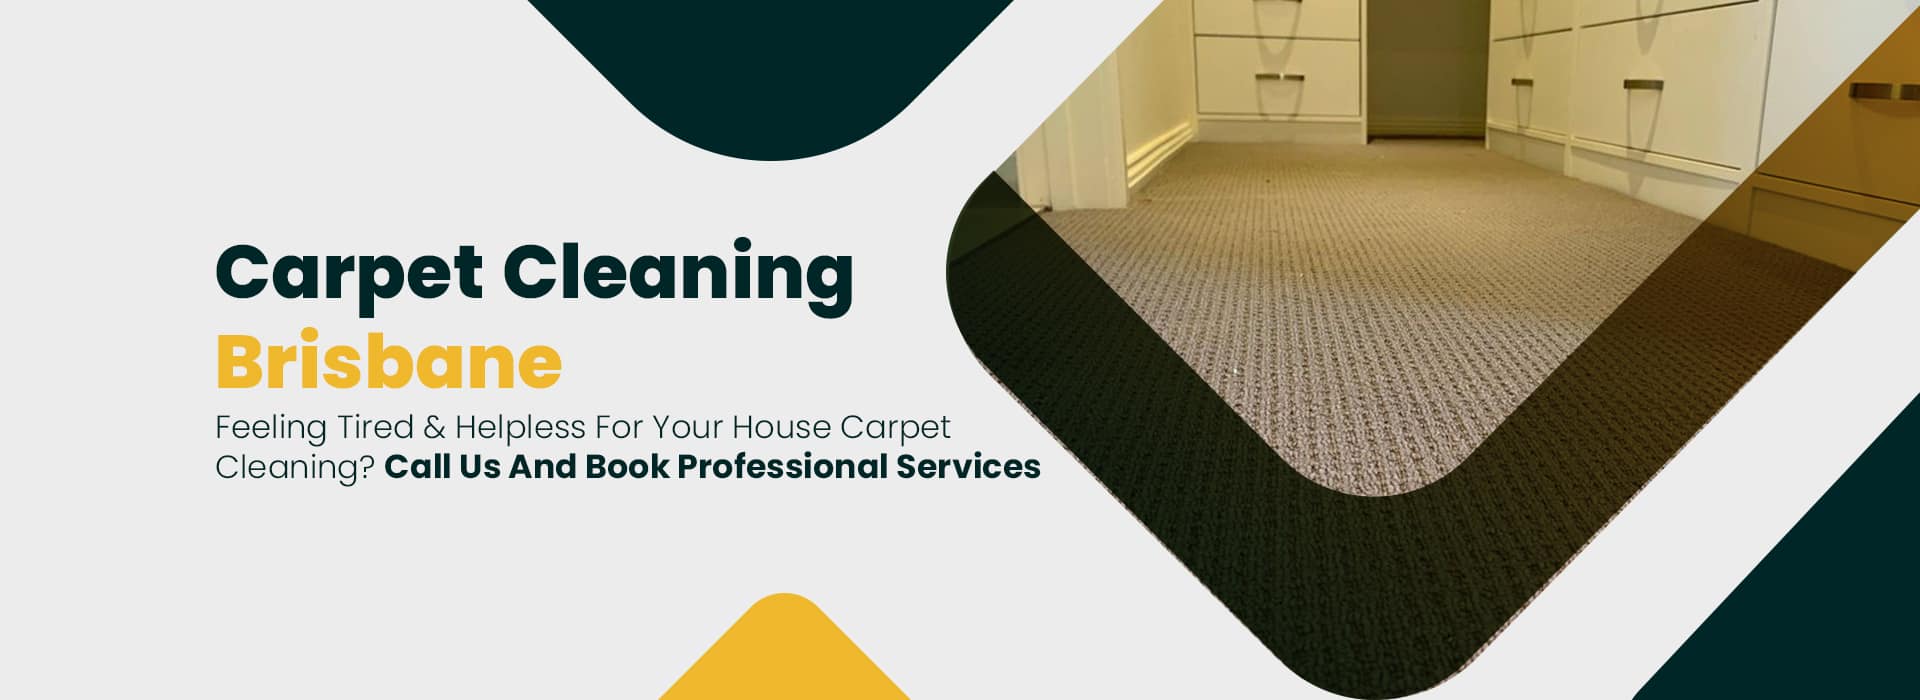 Carpet cleaning brisbane